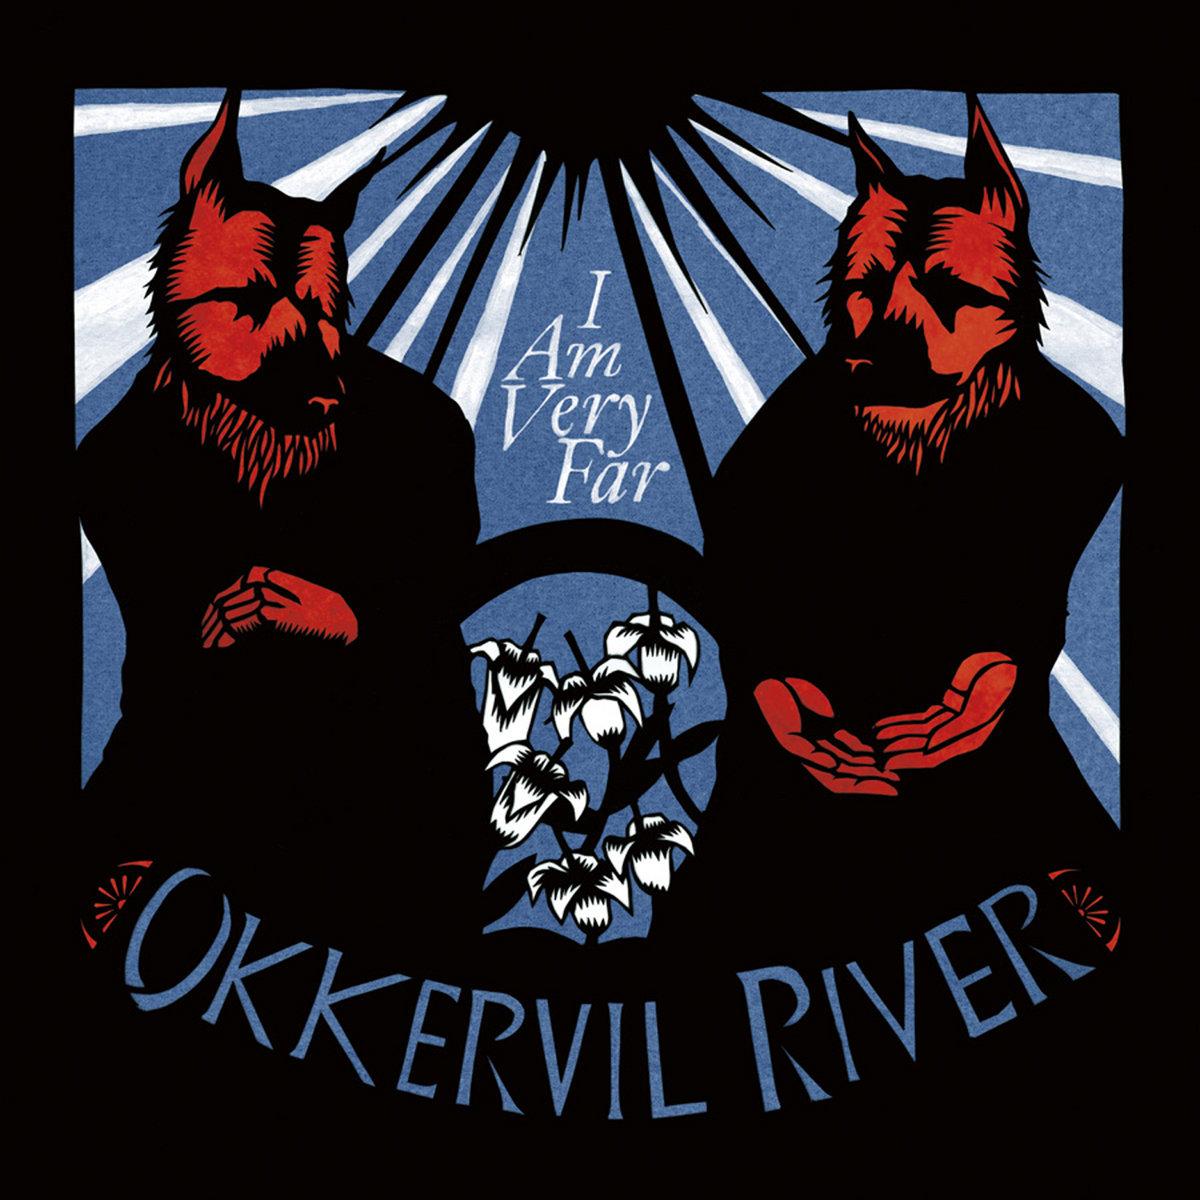 OKKERVIL RIVER - I am very far LP